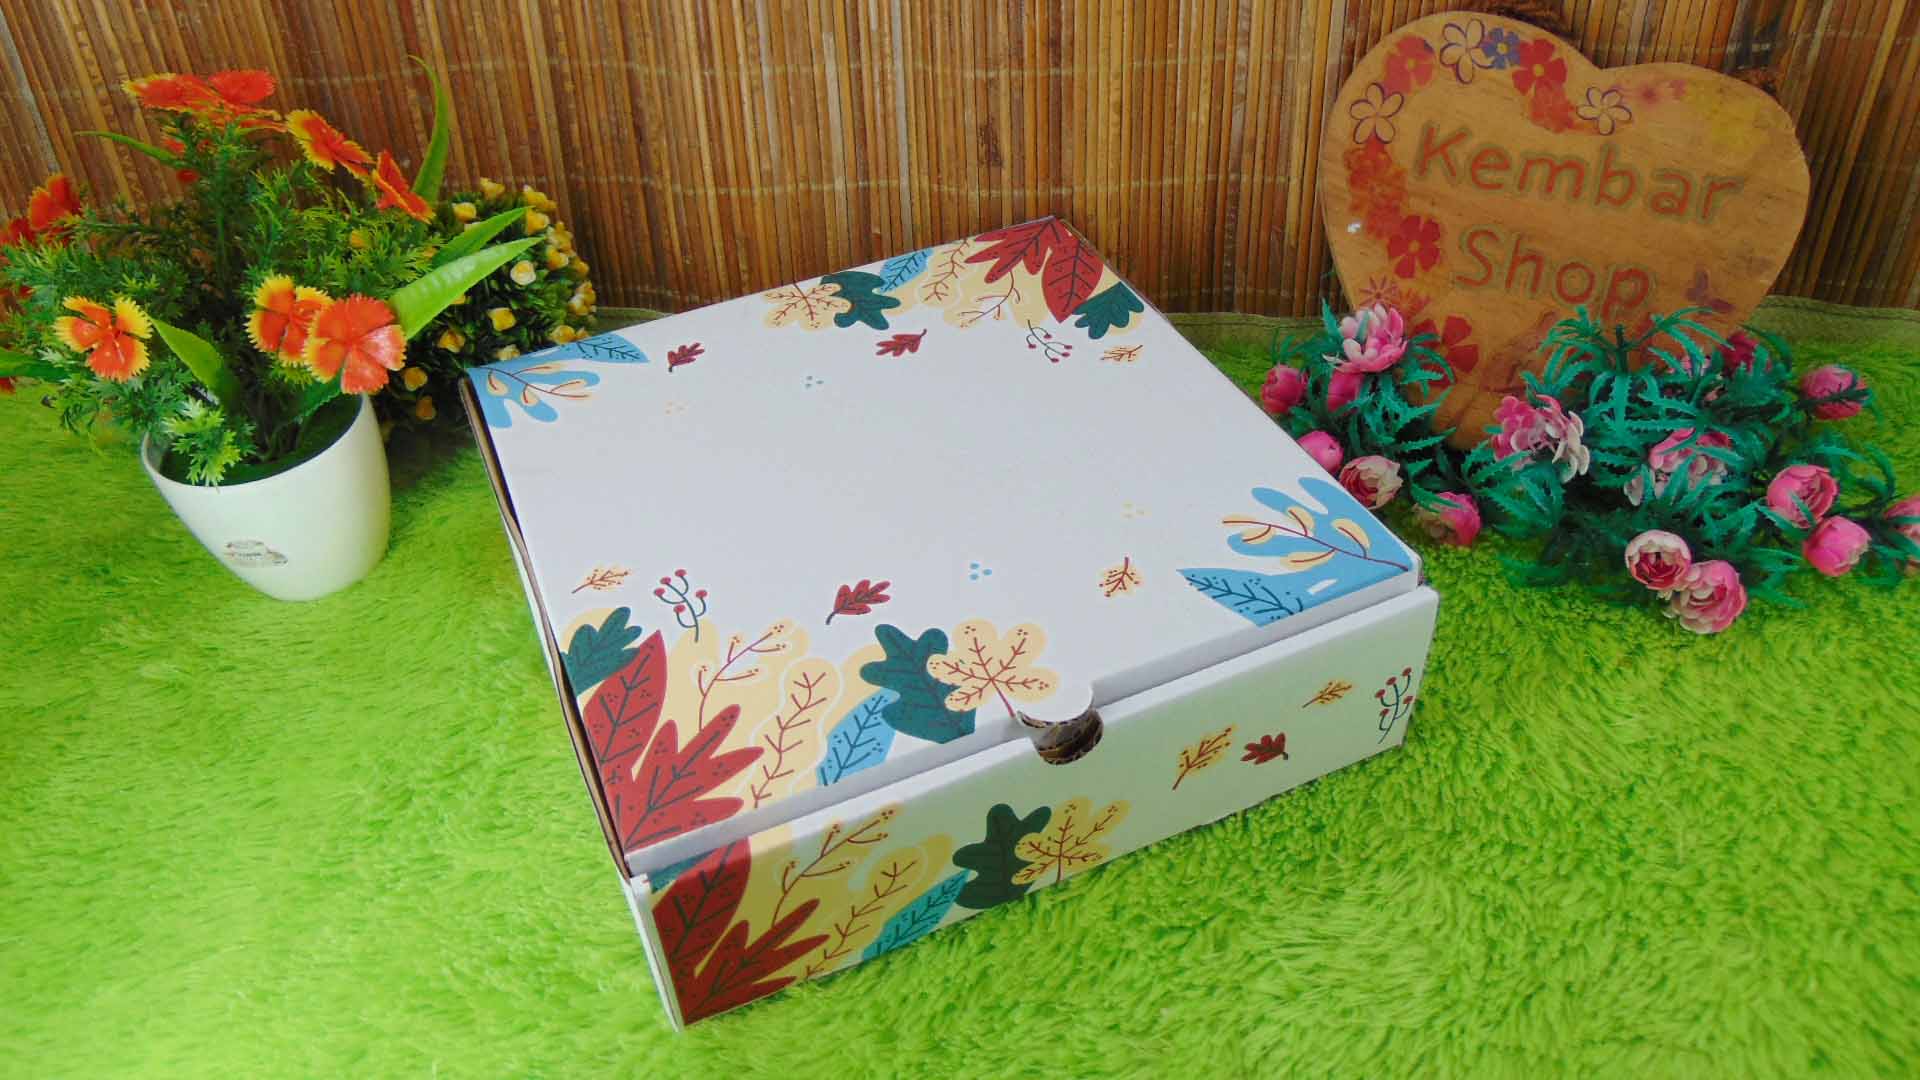 BISA COD - Kado hampers gift box Karakter Mickey Mouse Winnie the Pooh Hello Kitty Doraemon plus Botol Susu Dot dan Handuk (2)